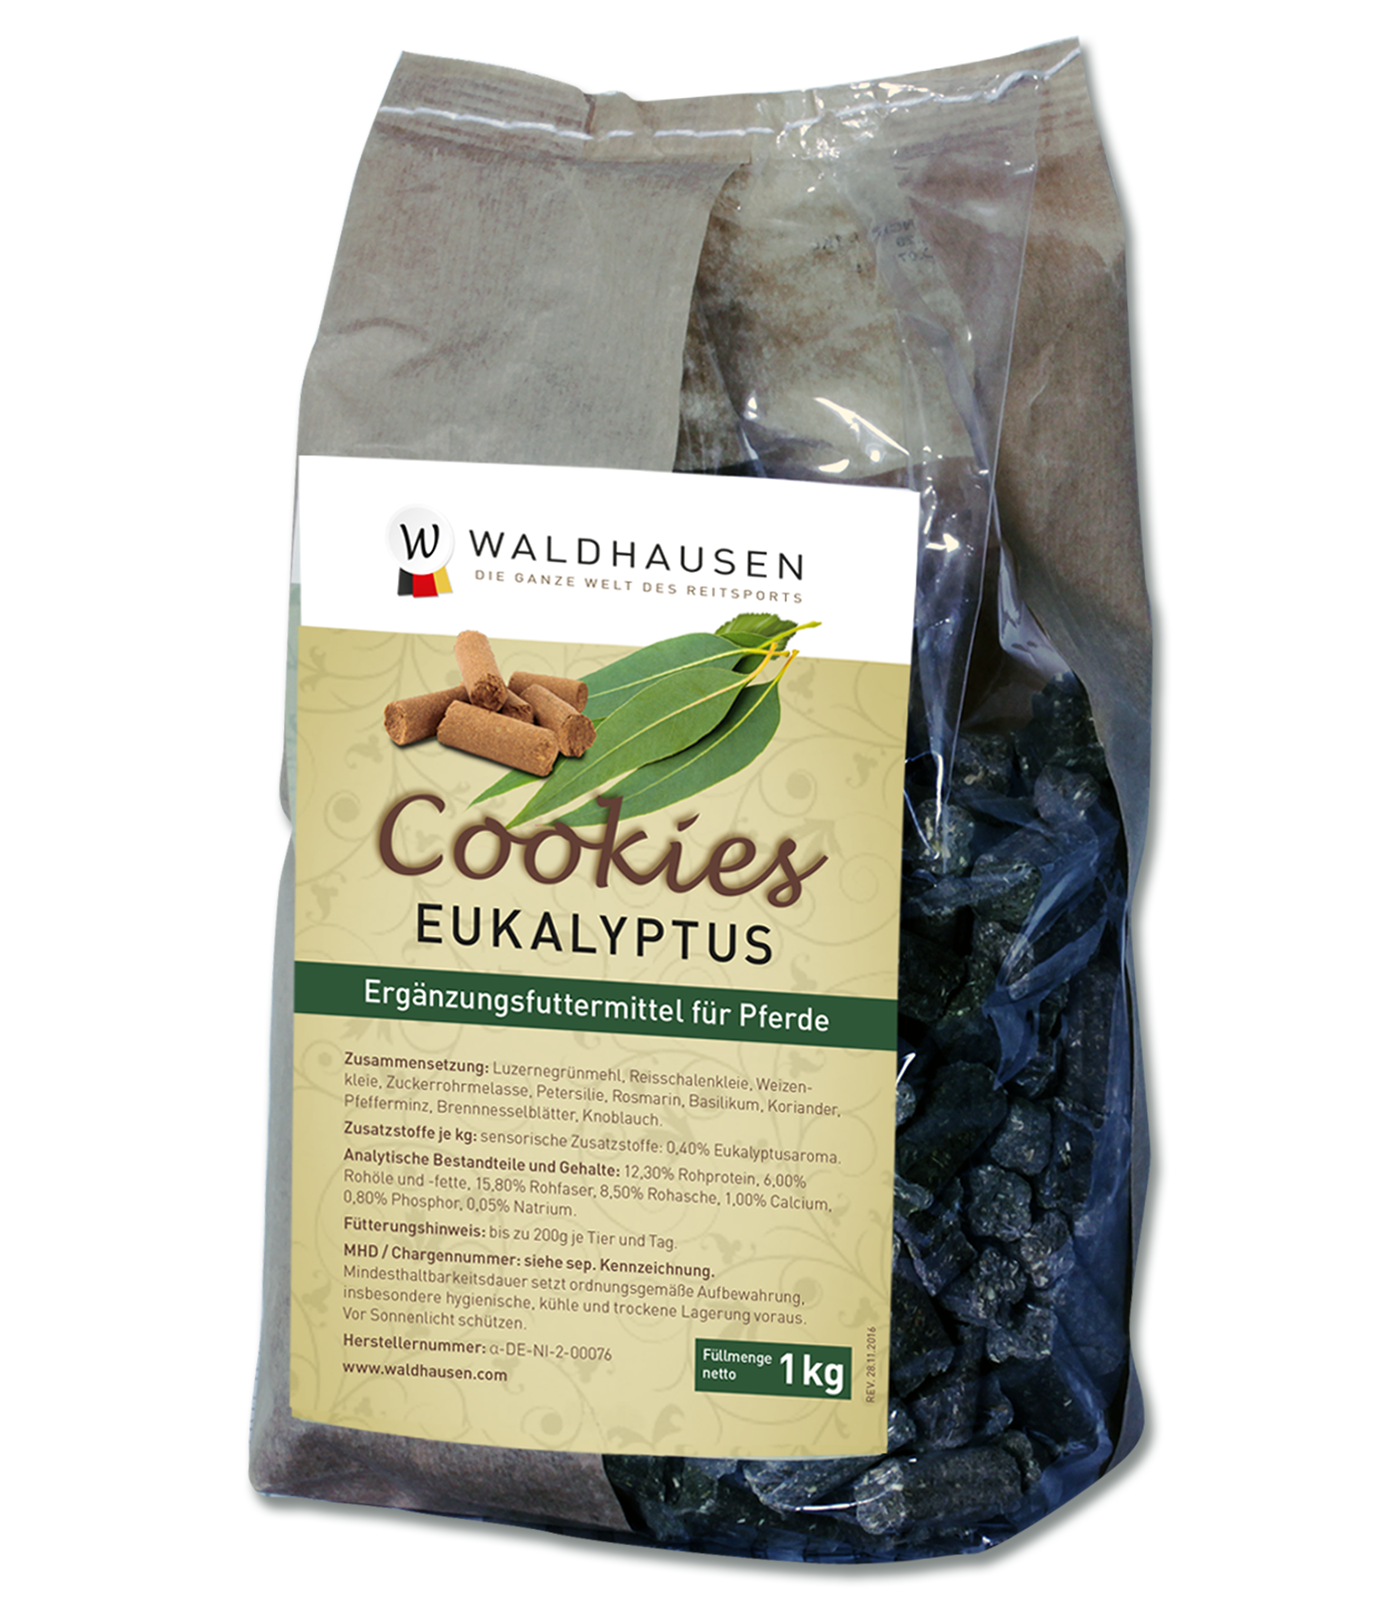 Waldhausen Cookies Eukalyptus, 1 Kg Tüte